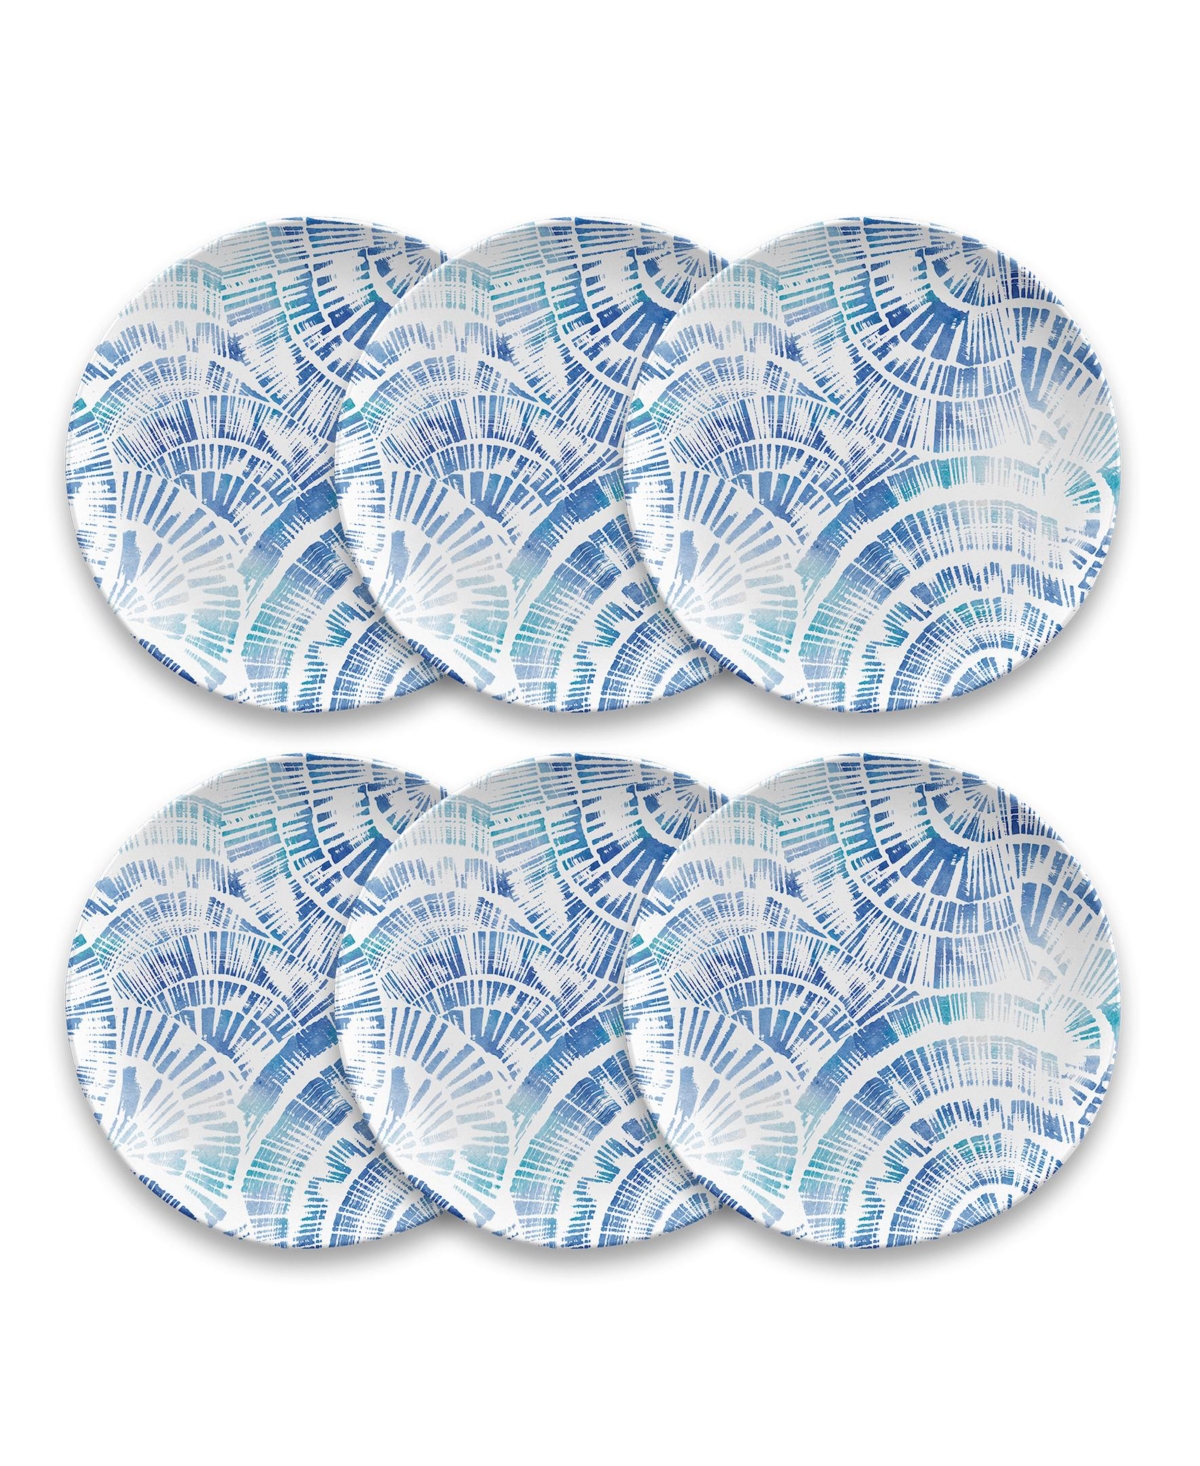 Coastal Scallops 6-Piece Salad Plate Set, 8.5" - Coastal Blue, Teal, White